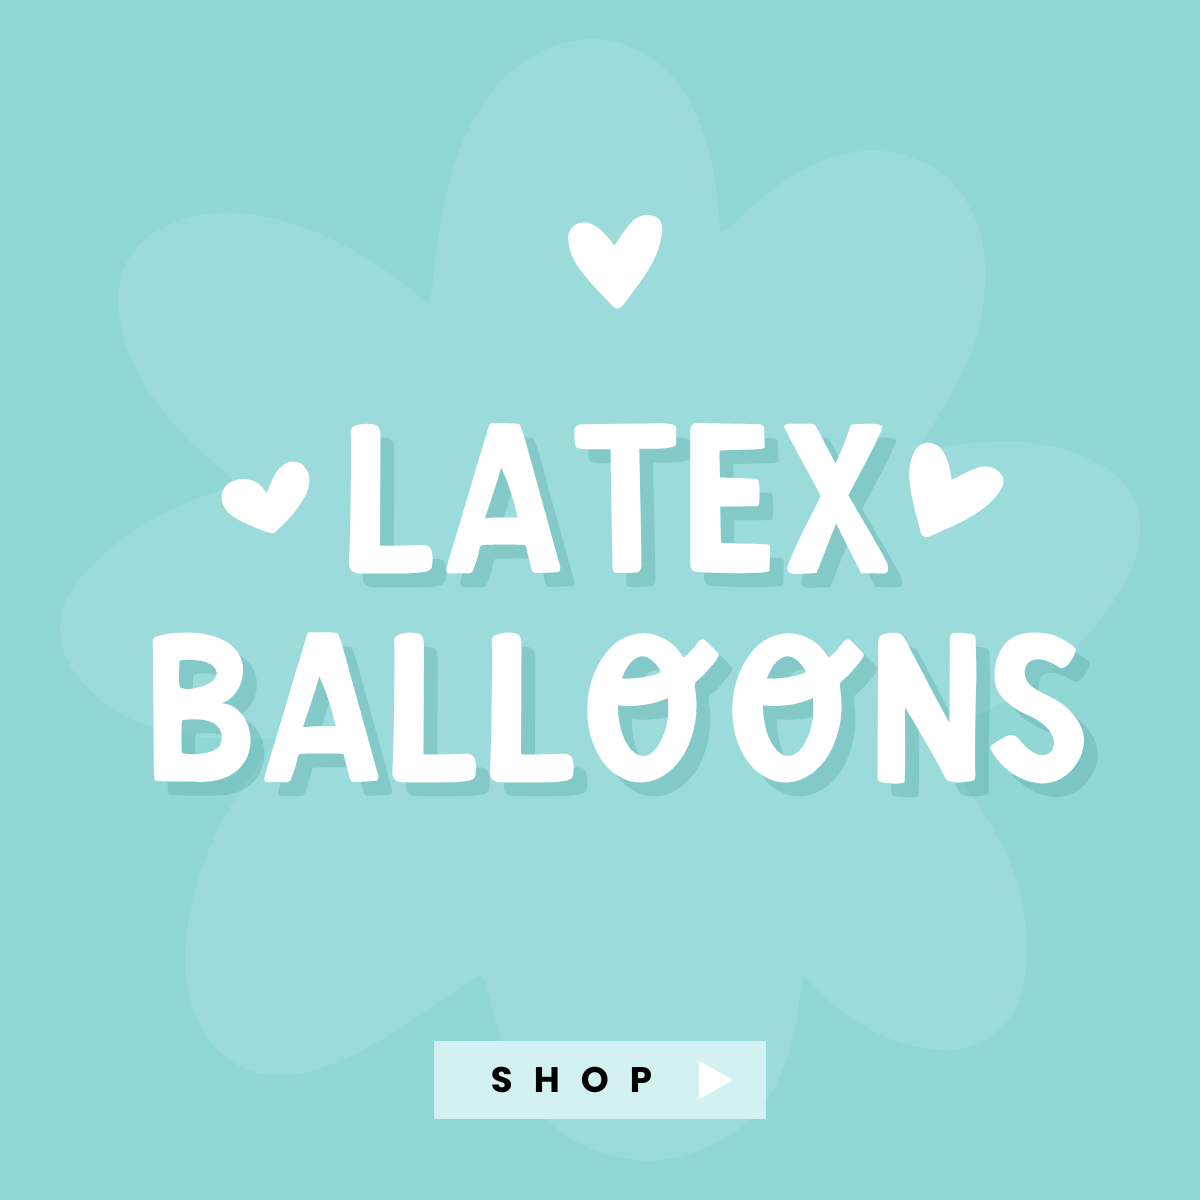 All Latex Balloons